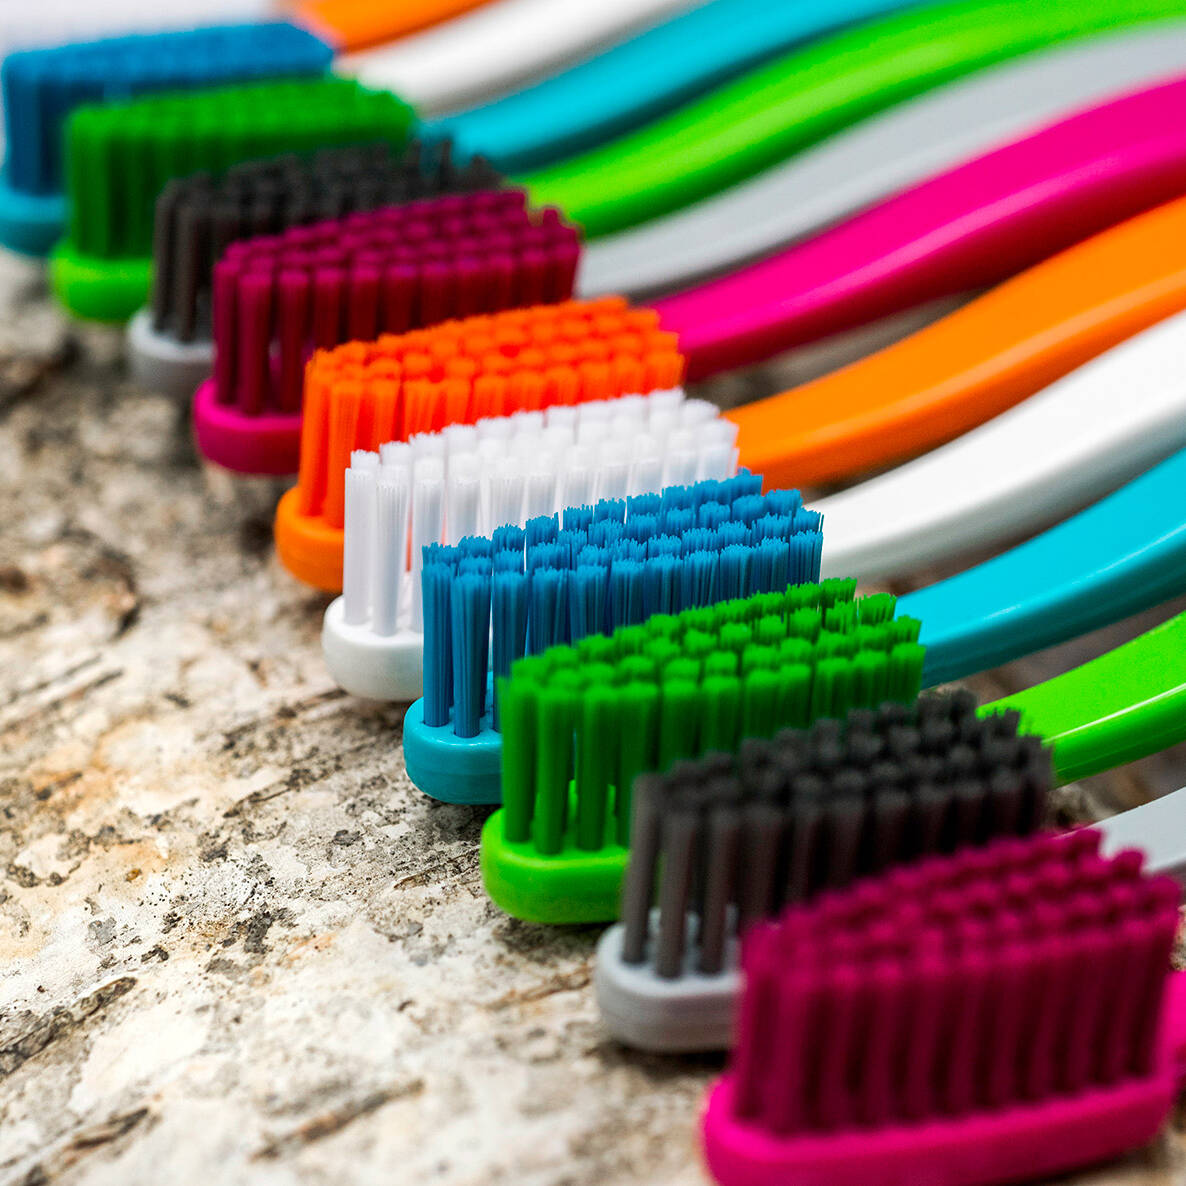 Biobrush periute de dinti ecologice - Niche Brands va prezinta o gama de periute de dinti ecologice din materiale de calitate